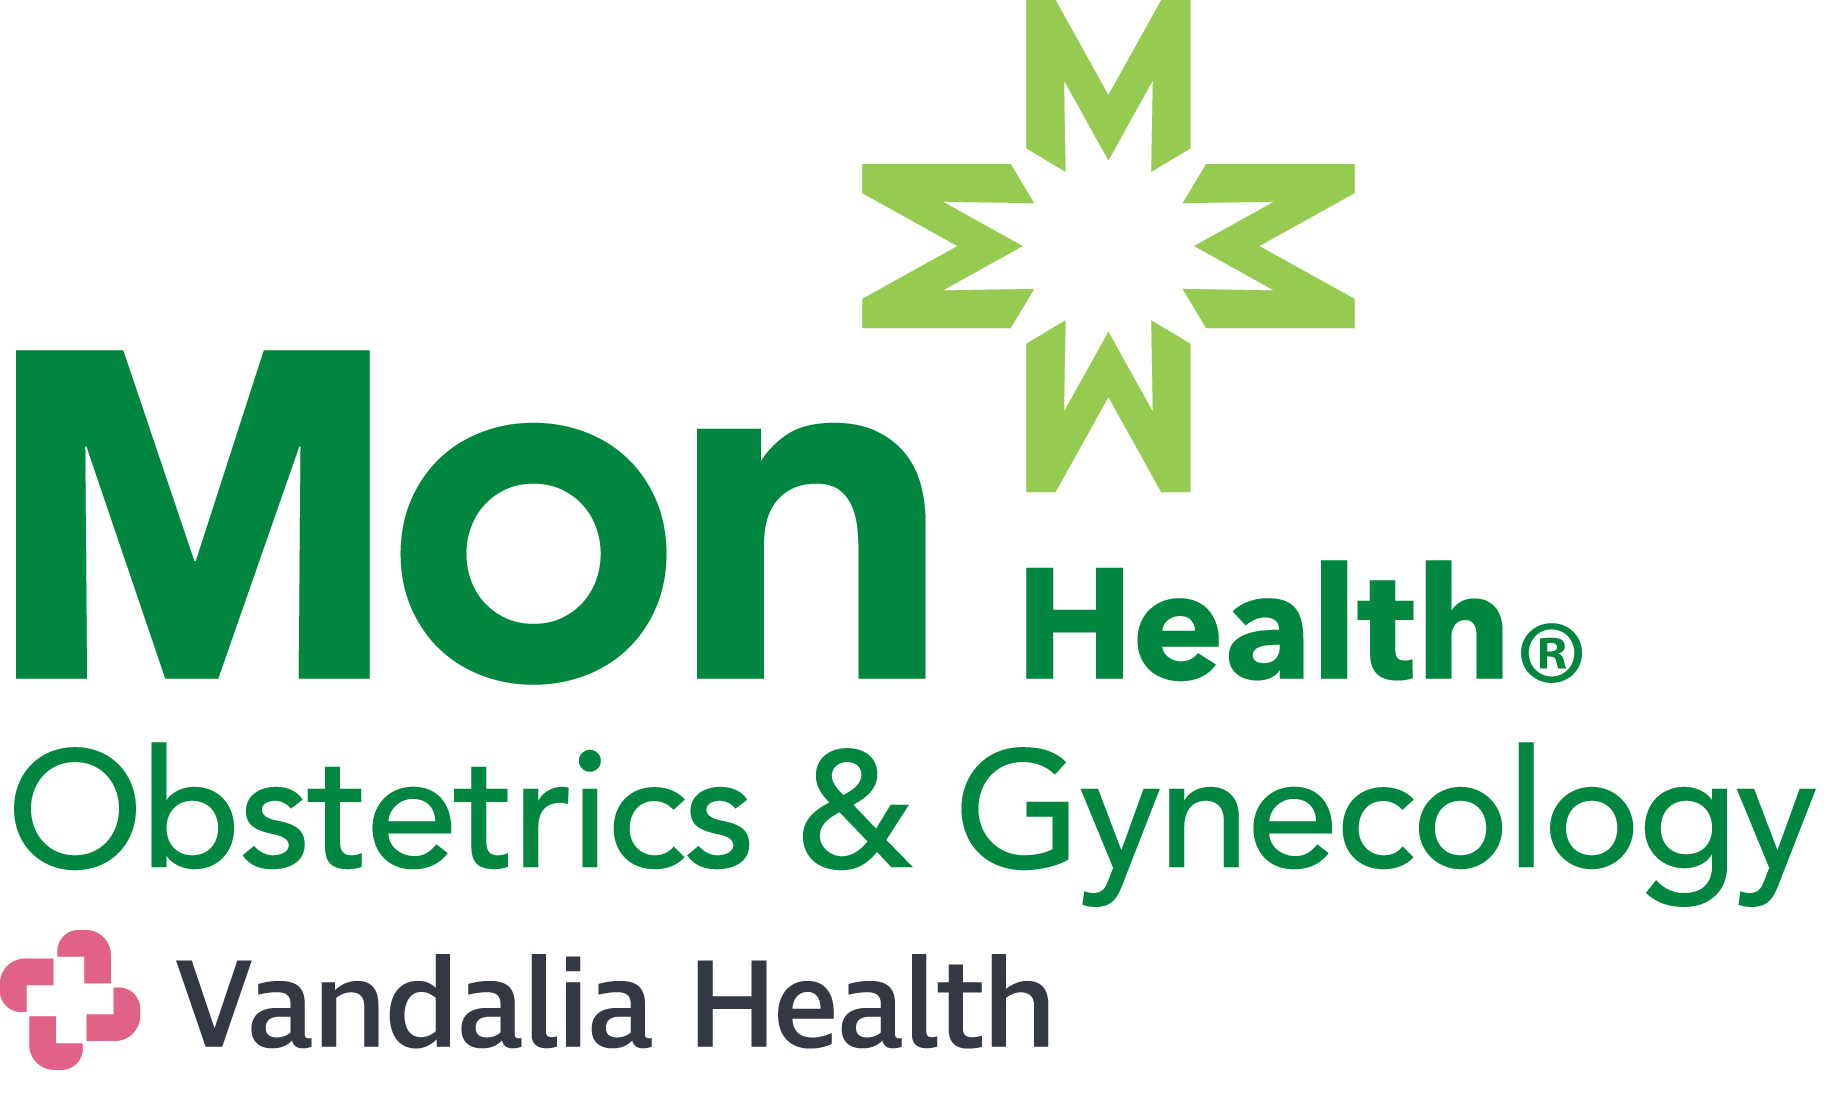 MH-VH-Obstetrics-Gynecology-Green-Logo-R